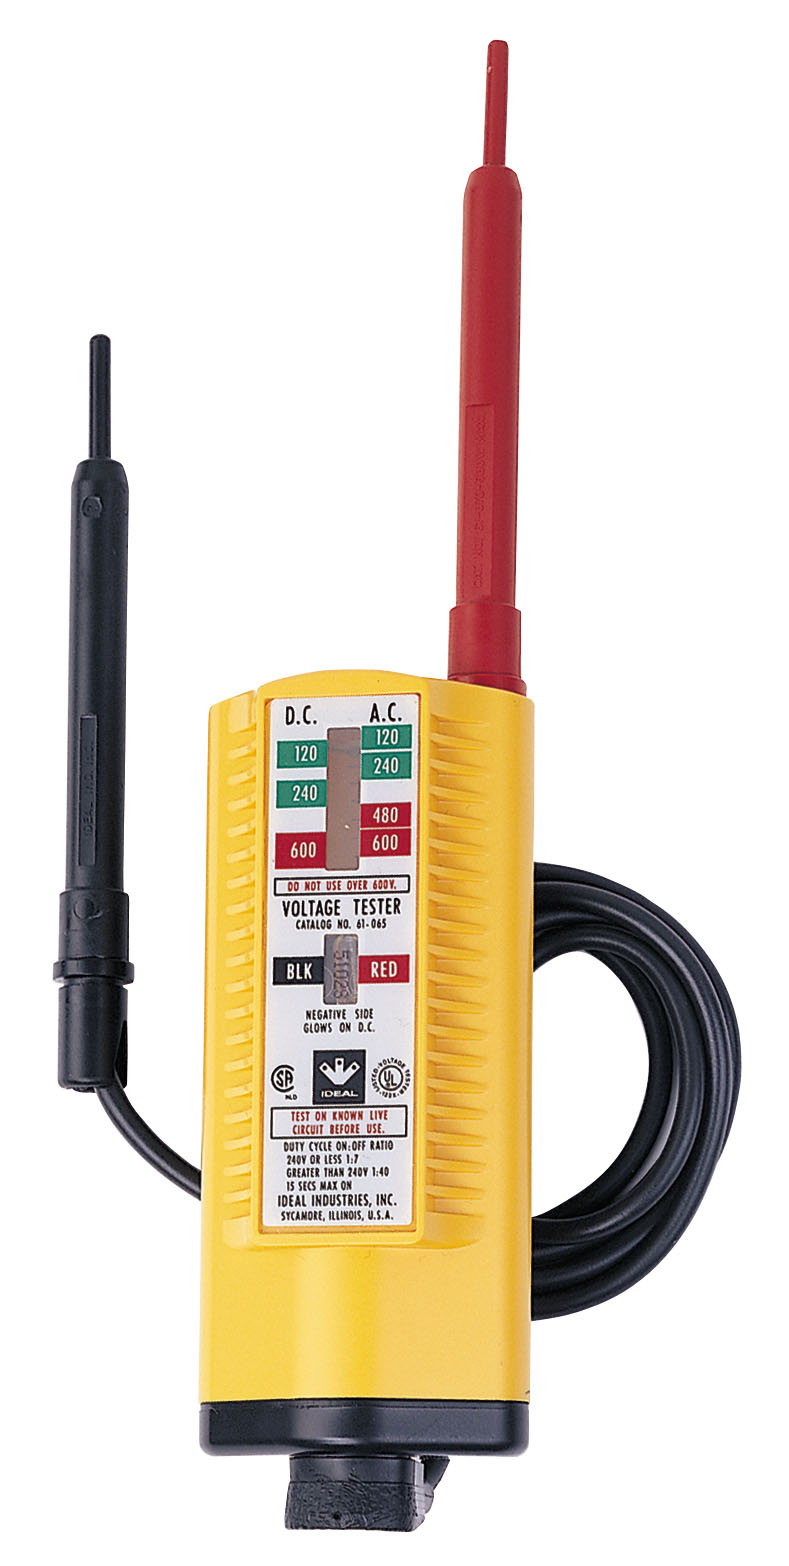 Recalled Ideal Solenoid Voltage Tester, model 61-075